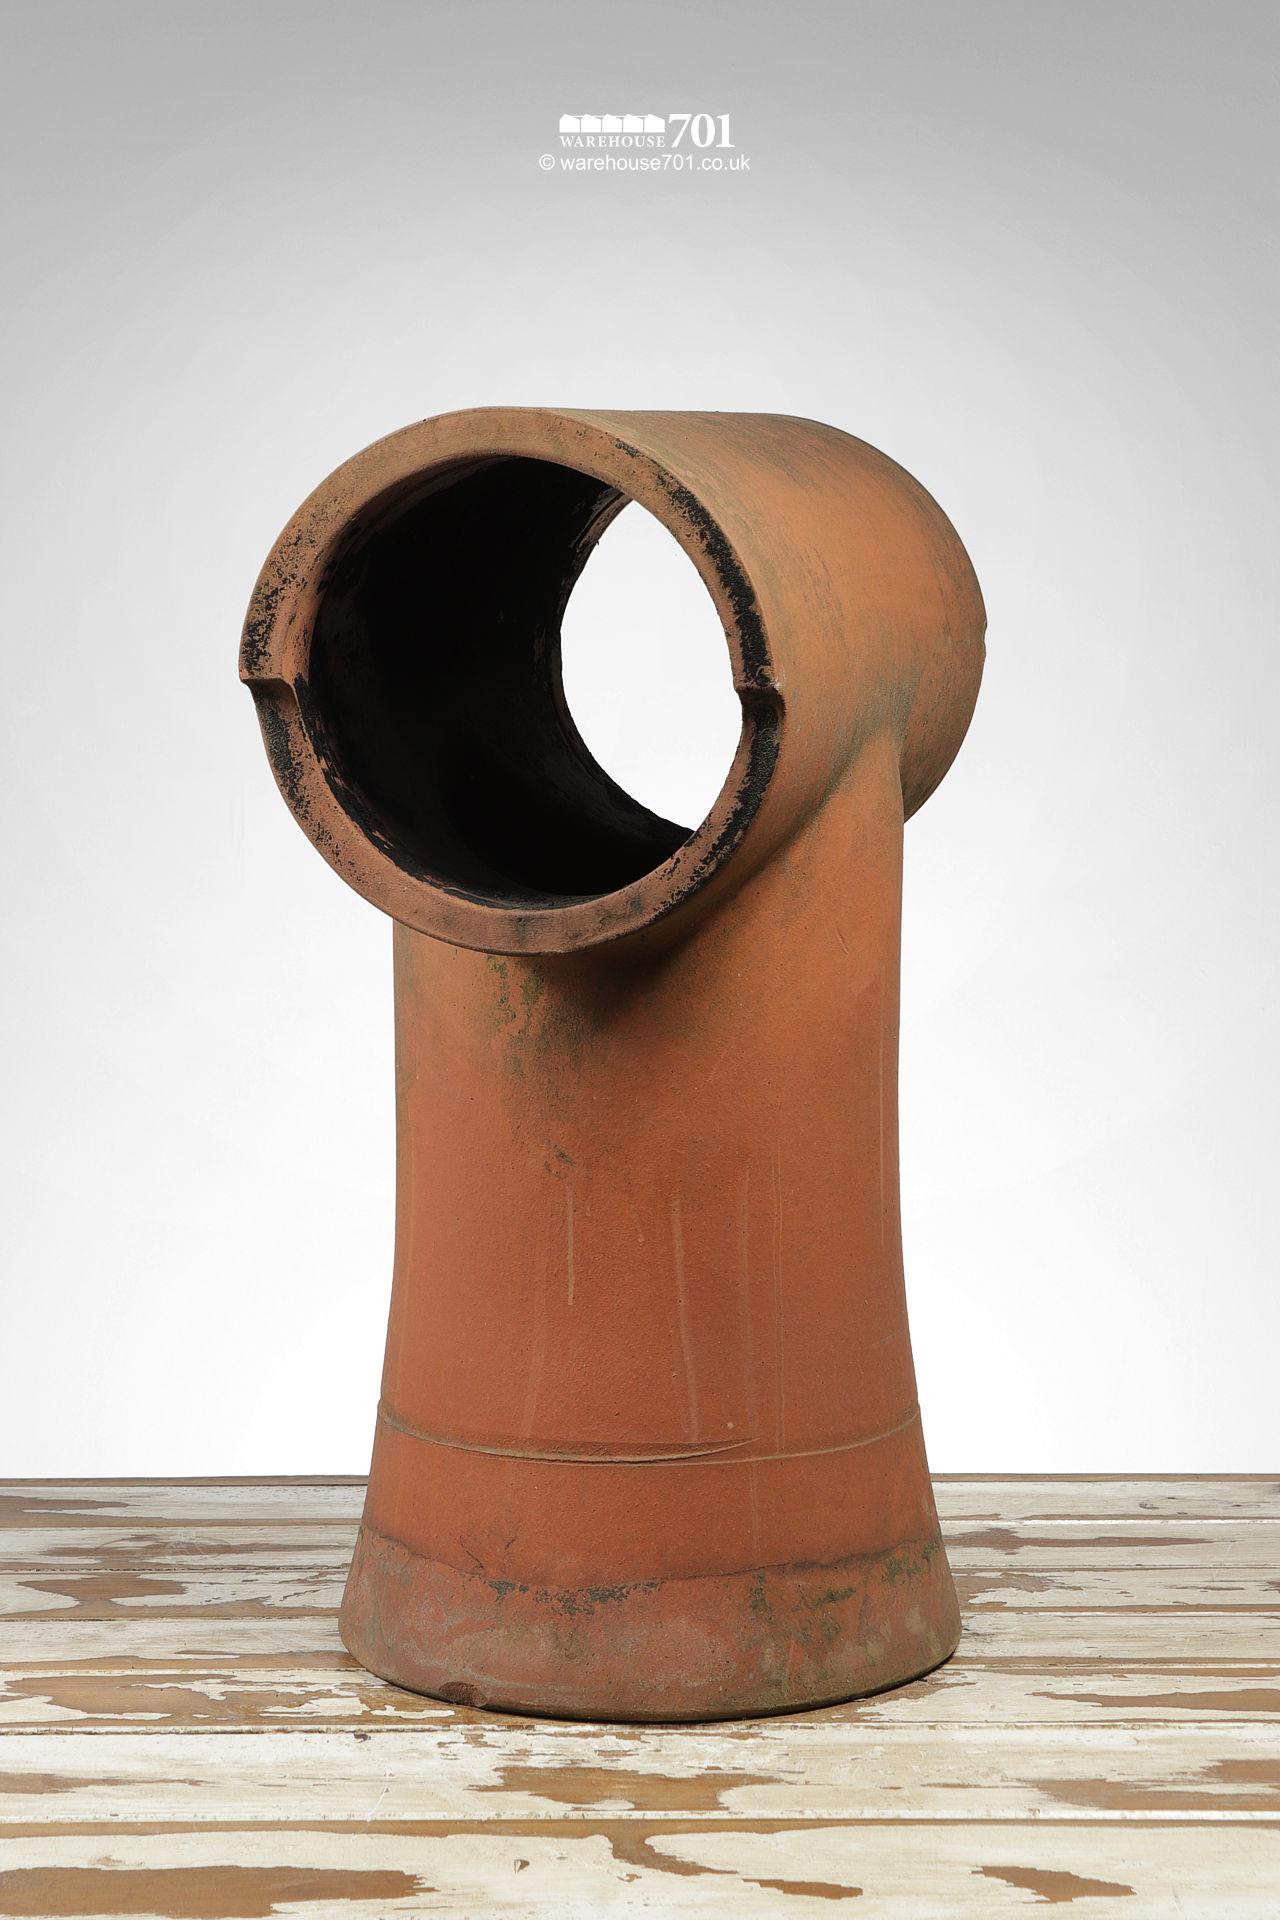 Vintage Style Tee-Top Terracotta Chimney Pot #3